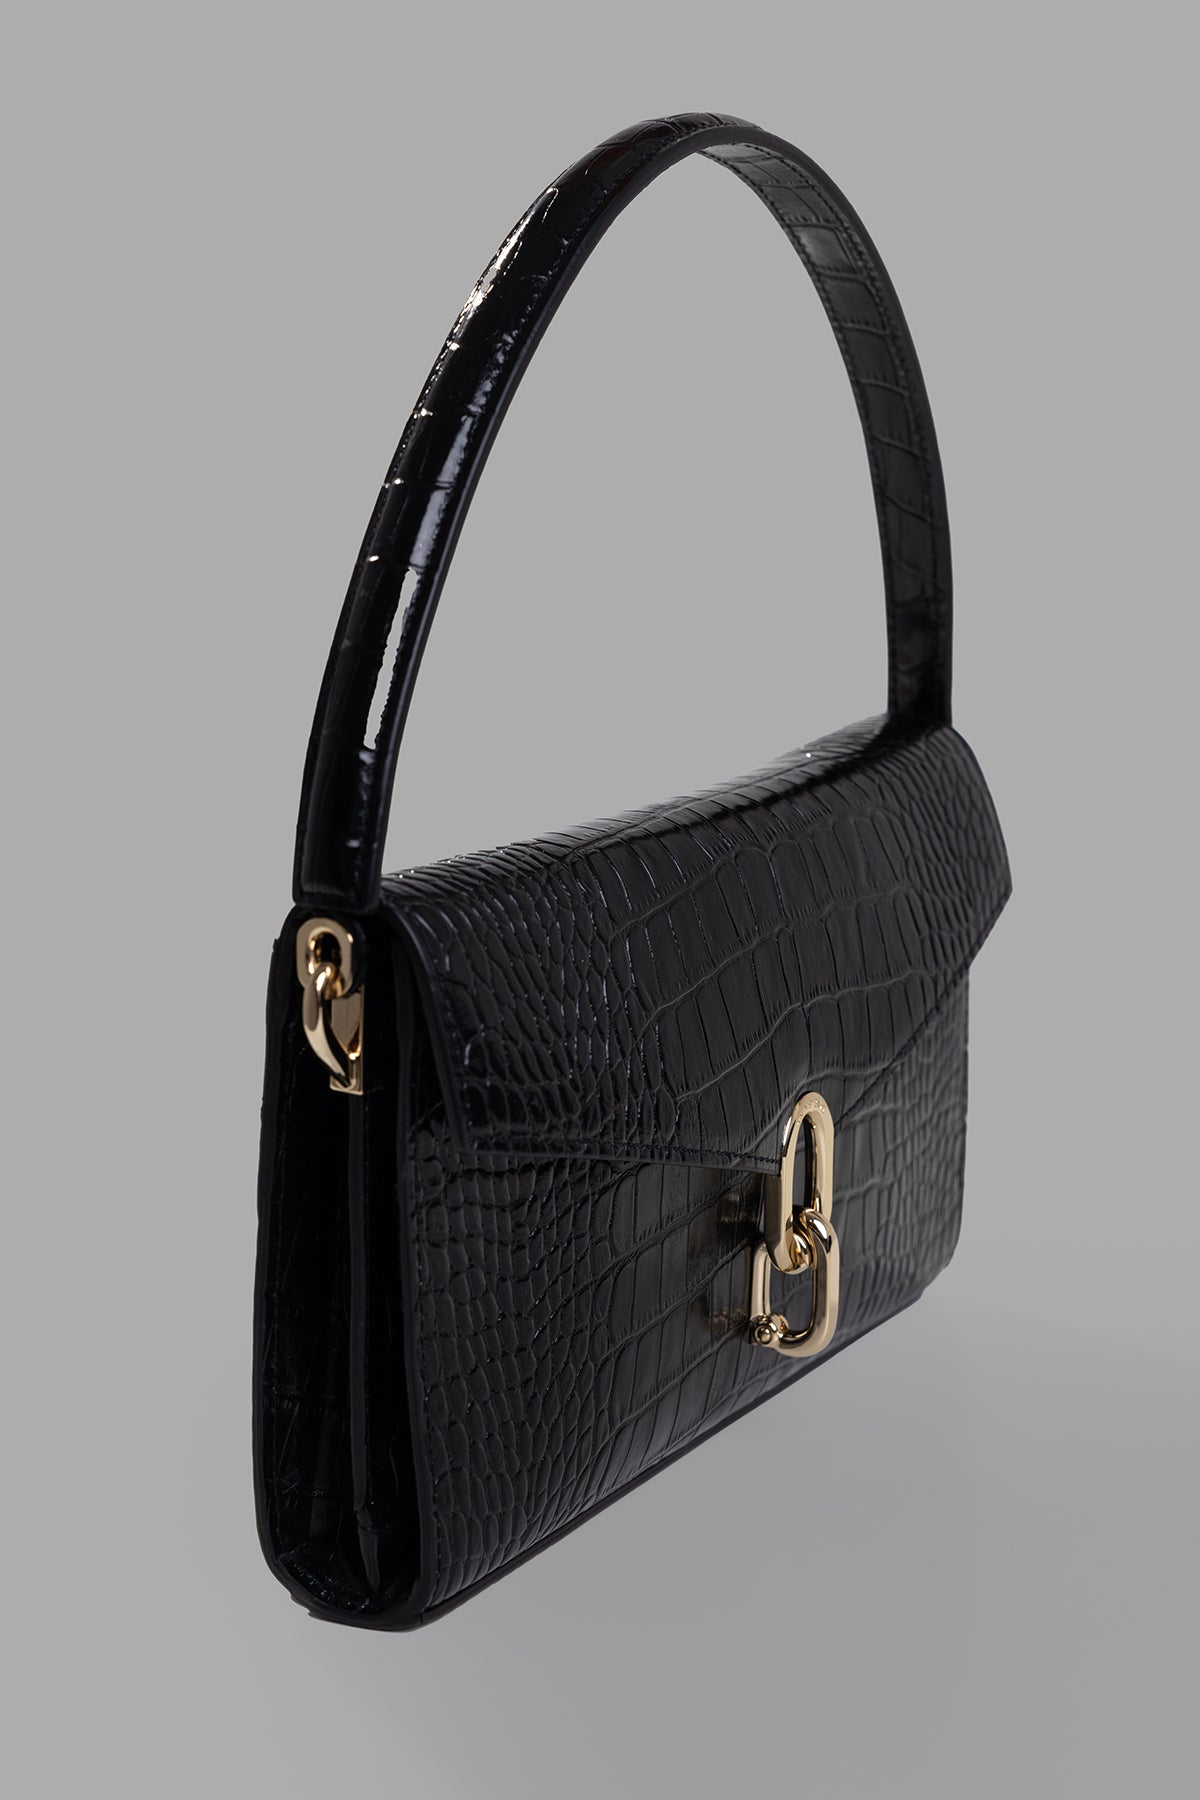 Colette Croc Leather Bag